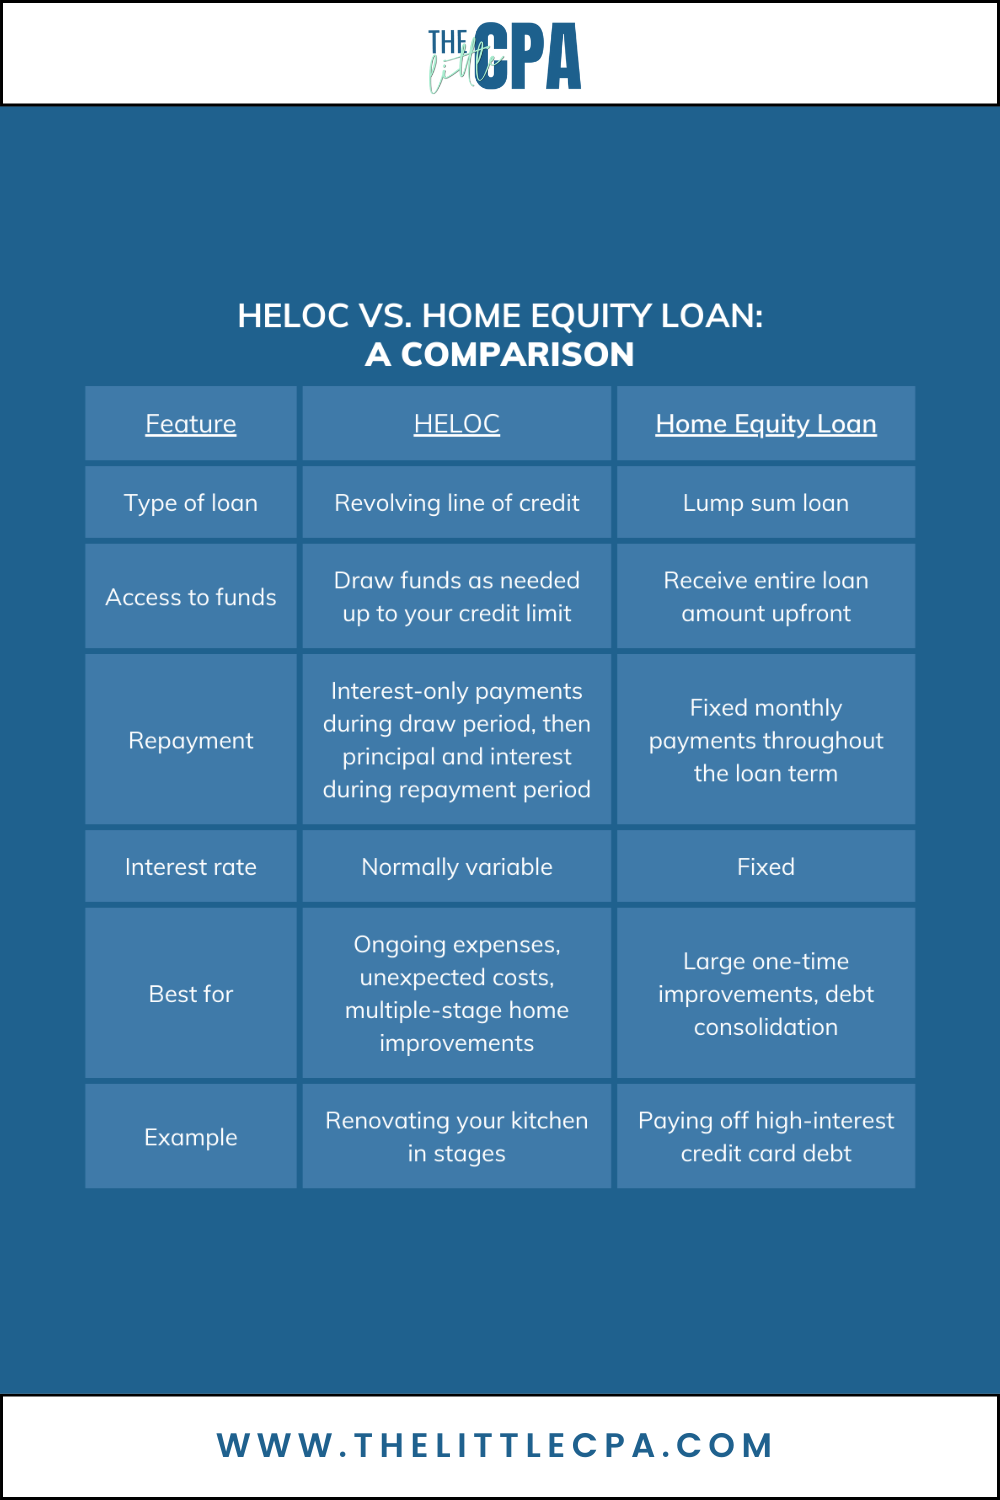 HELOC vs Home Equity Loan Comparison